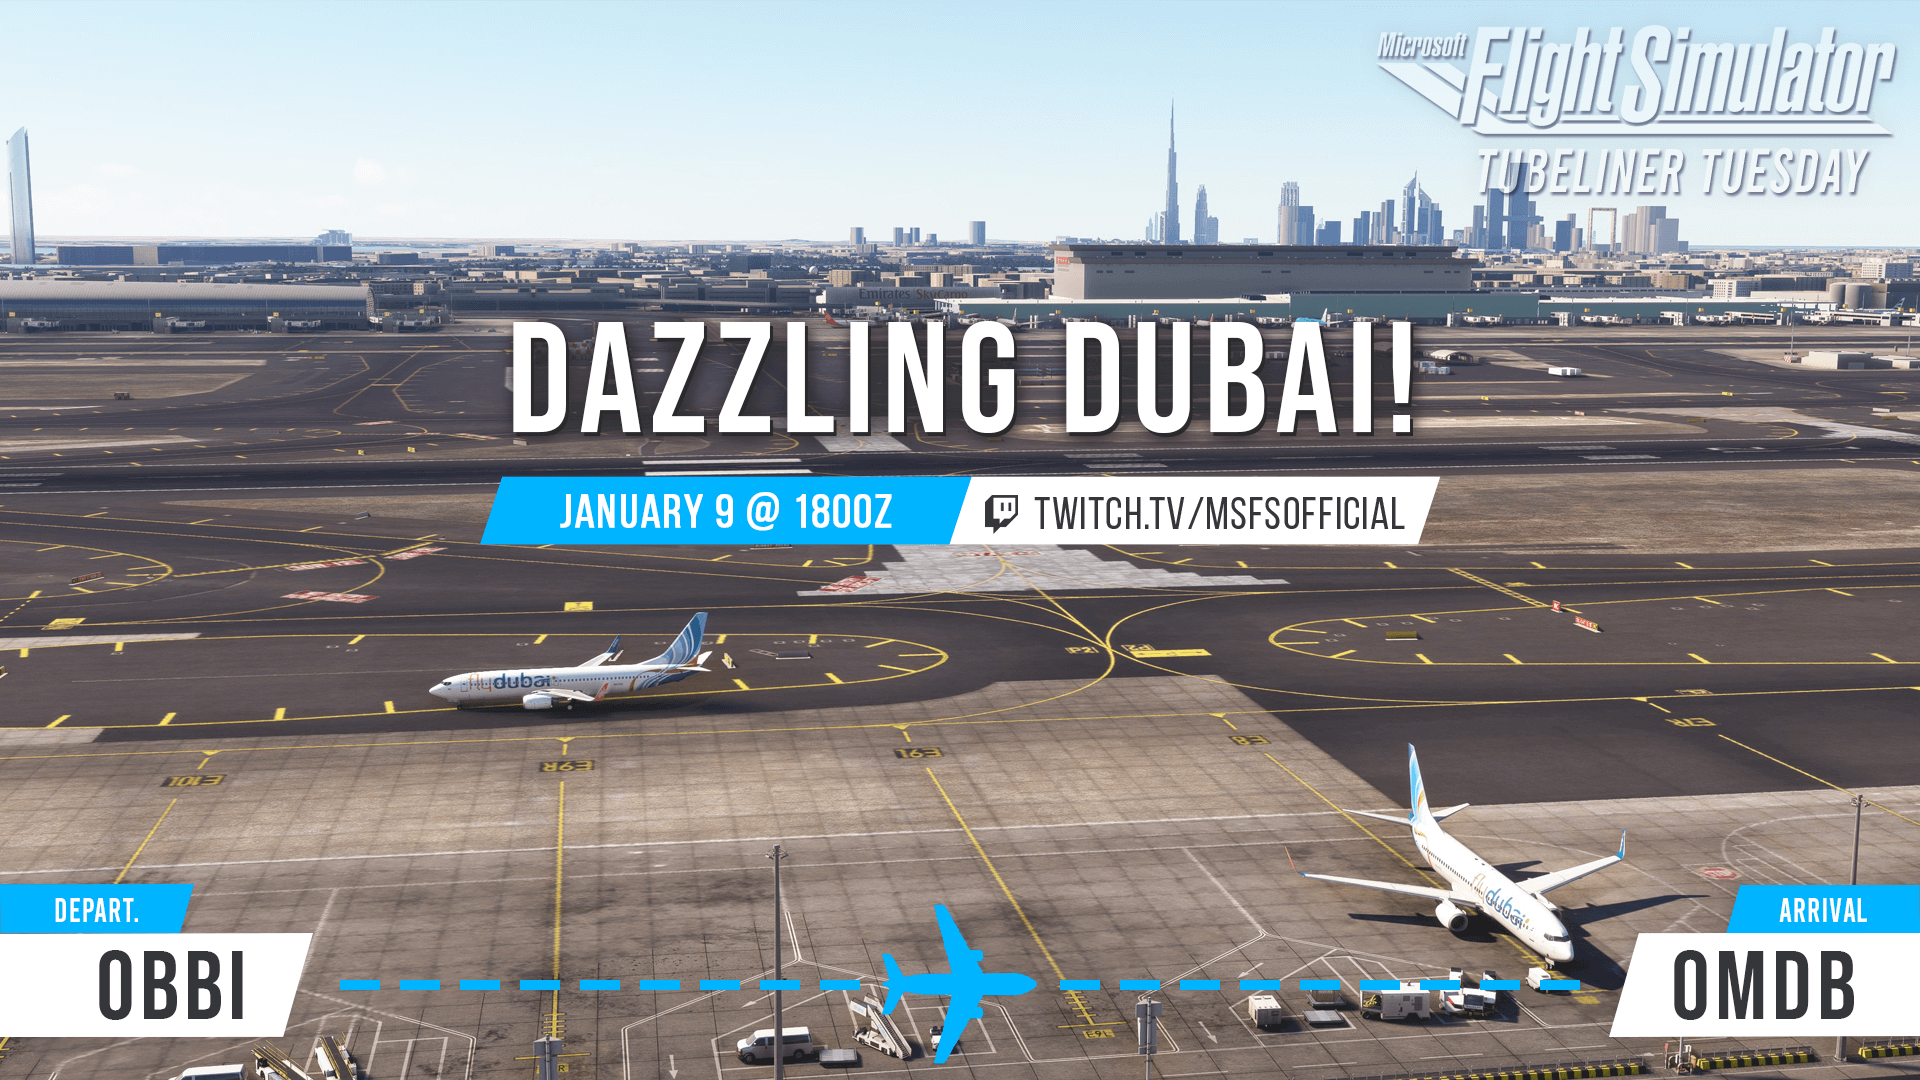 Tubeliner Tuesday: Dazzling Dubai